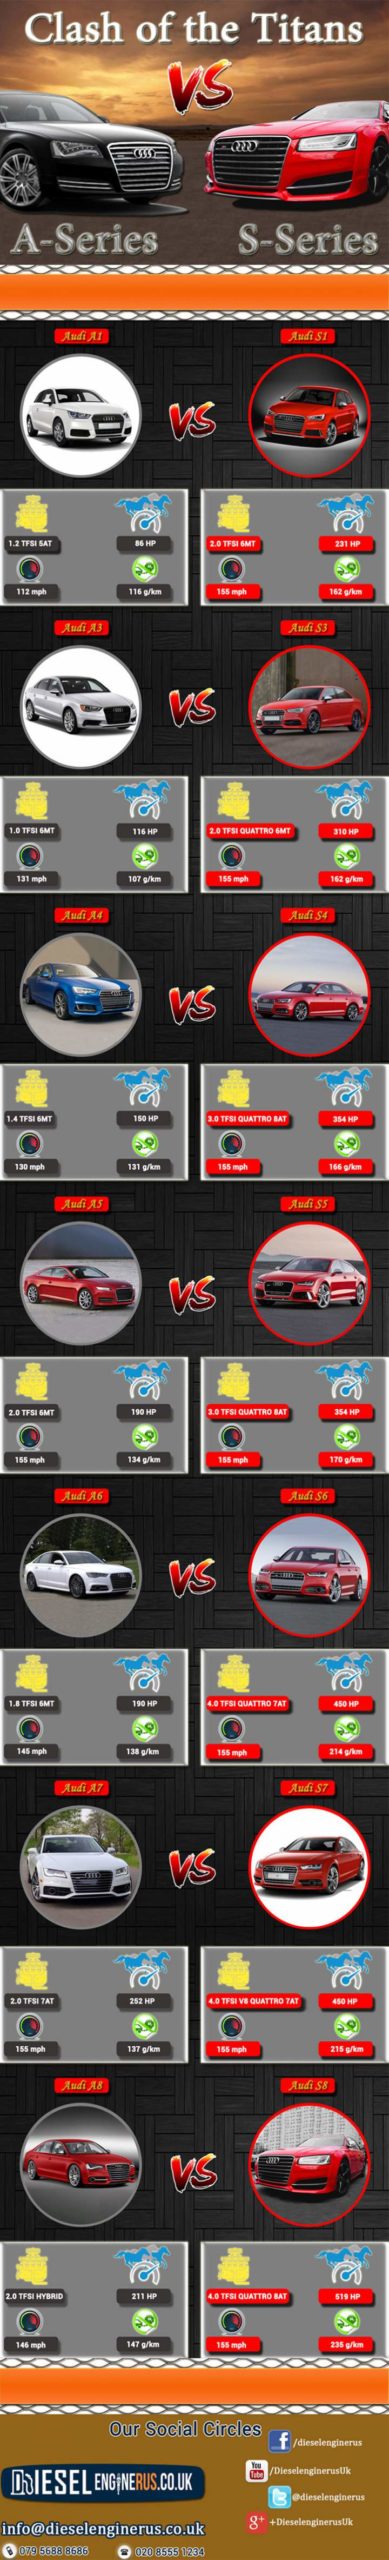 Audi-A-Series-vs-Audi-S-Series